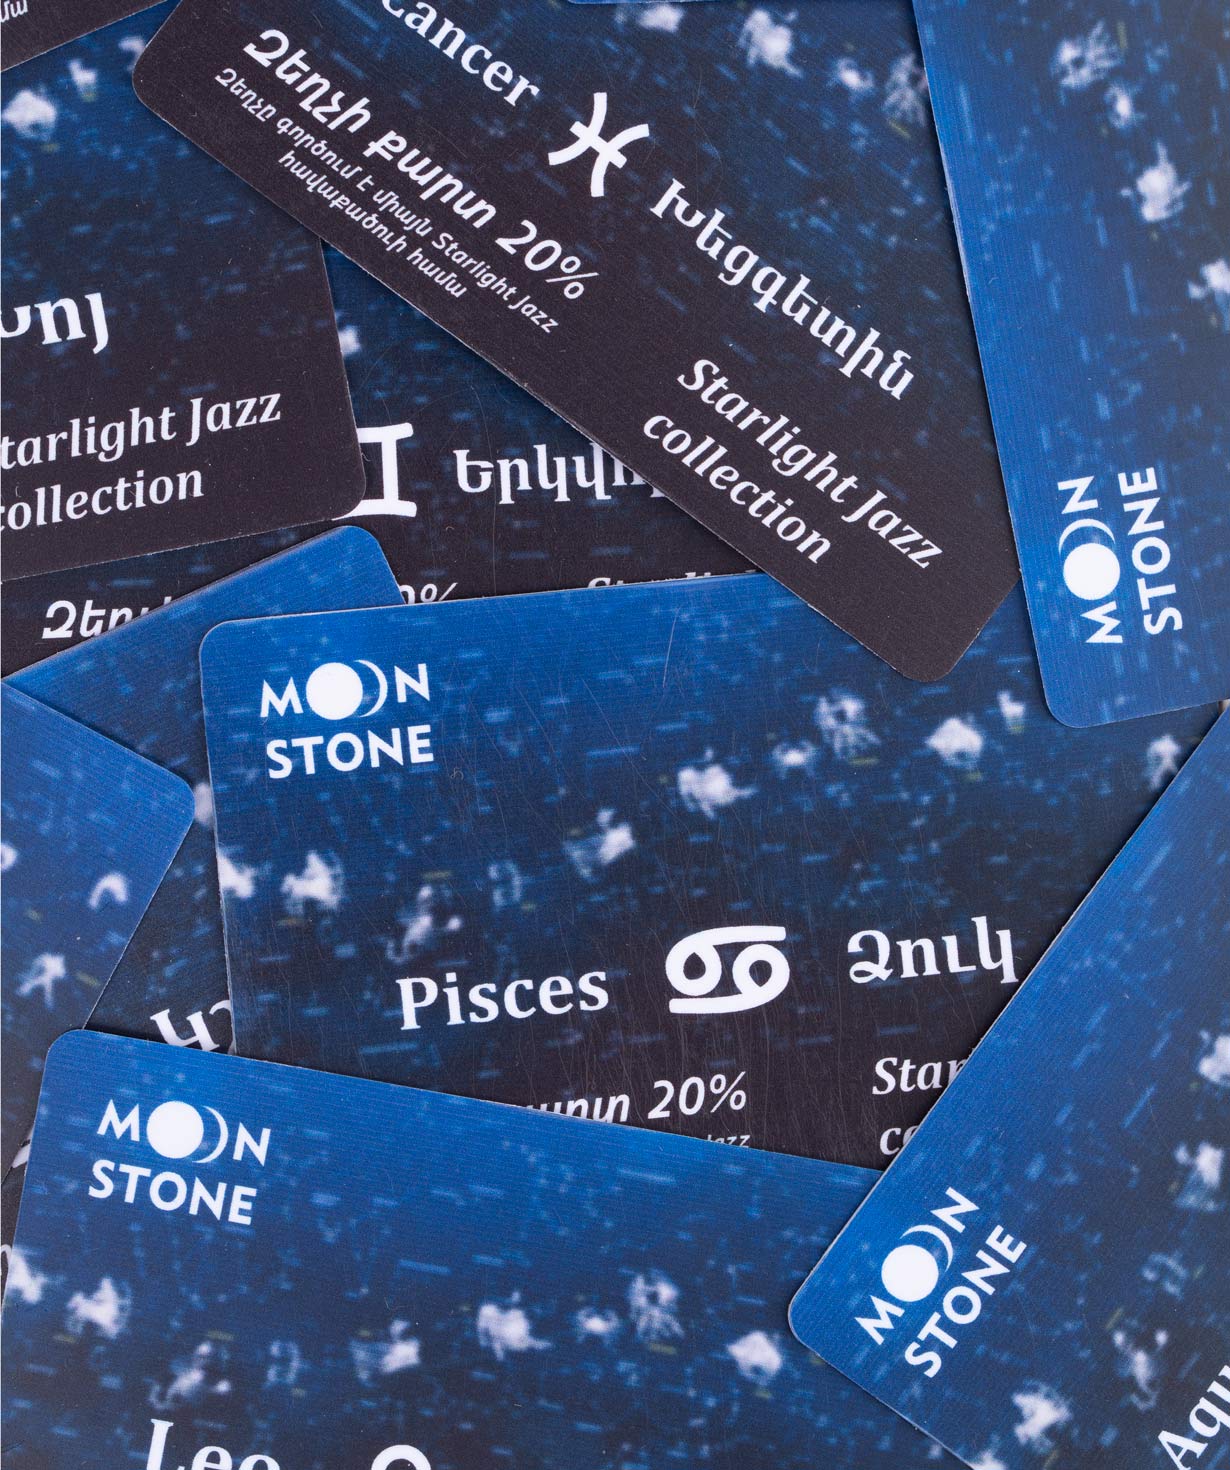 Rhodium Plated Silver Pendant Sagittarius Starlight Jazz Collection